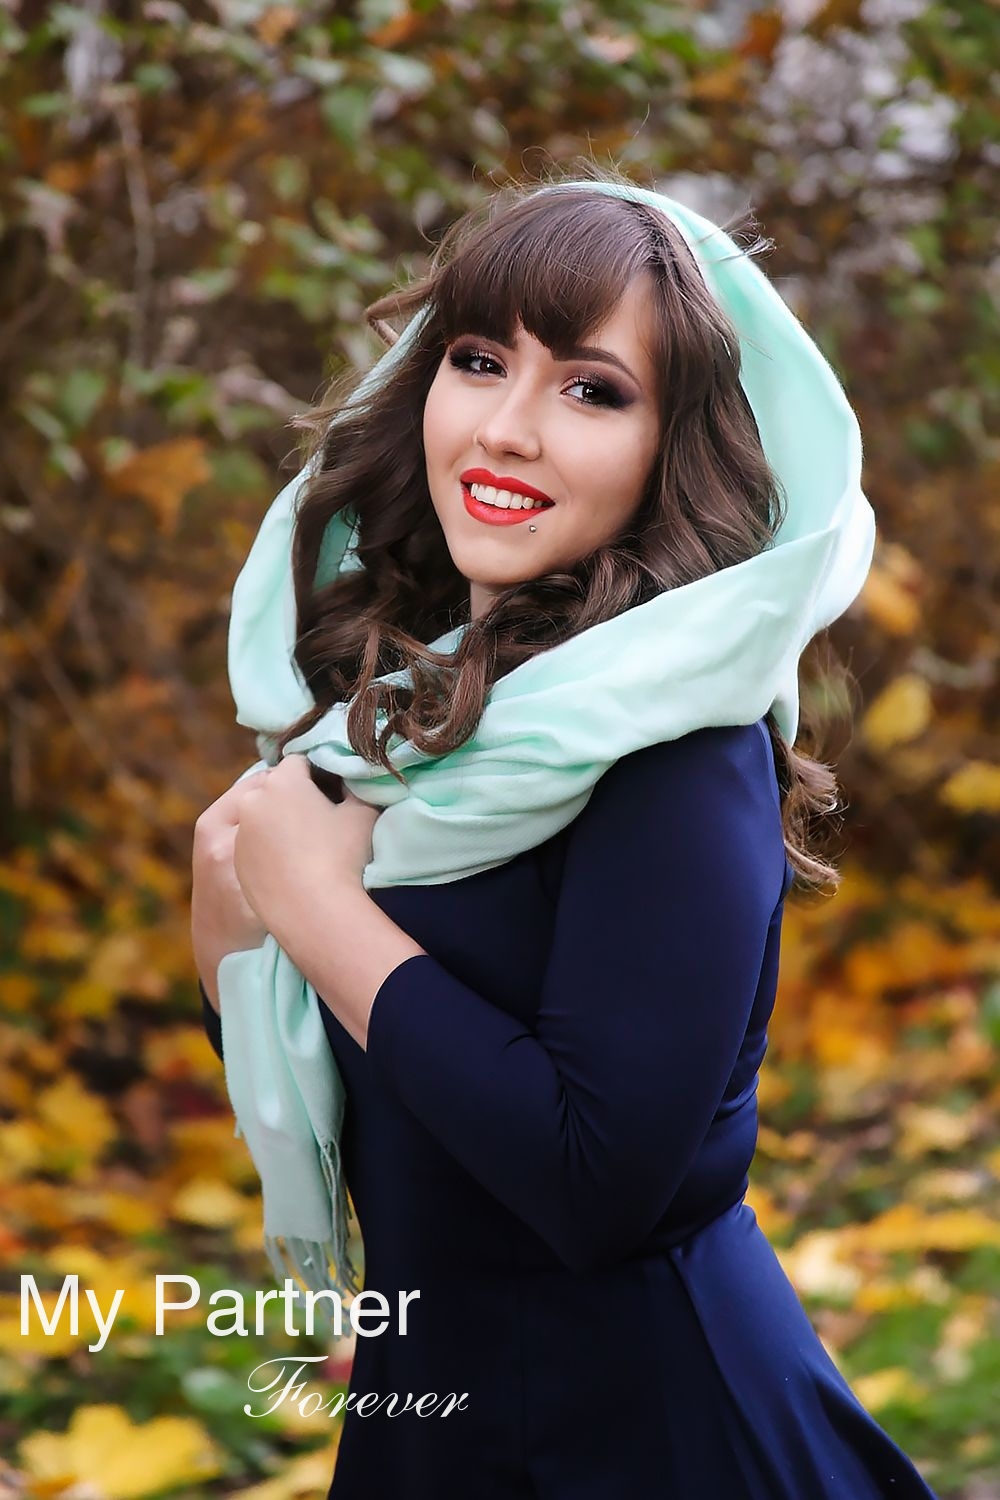 Dating Service to Meet Stunning Russian Woman Anna from Almaty, Kazakhstan